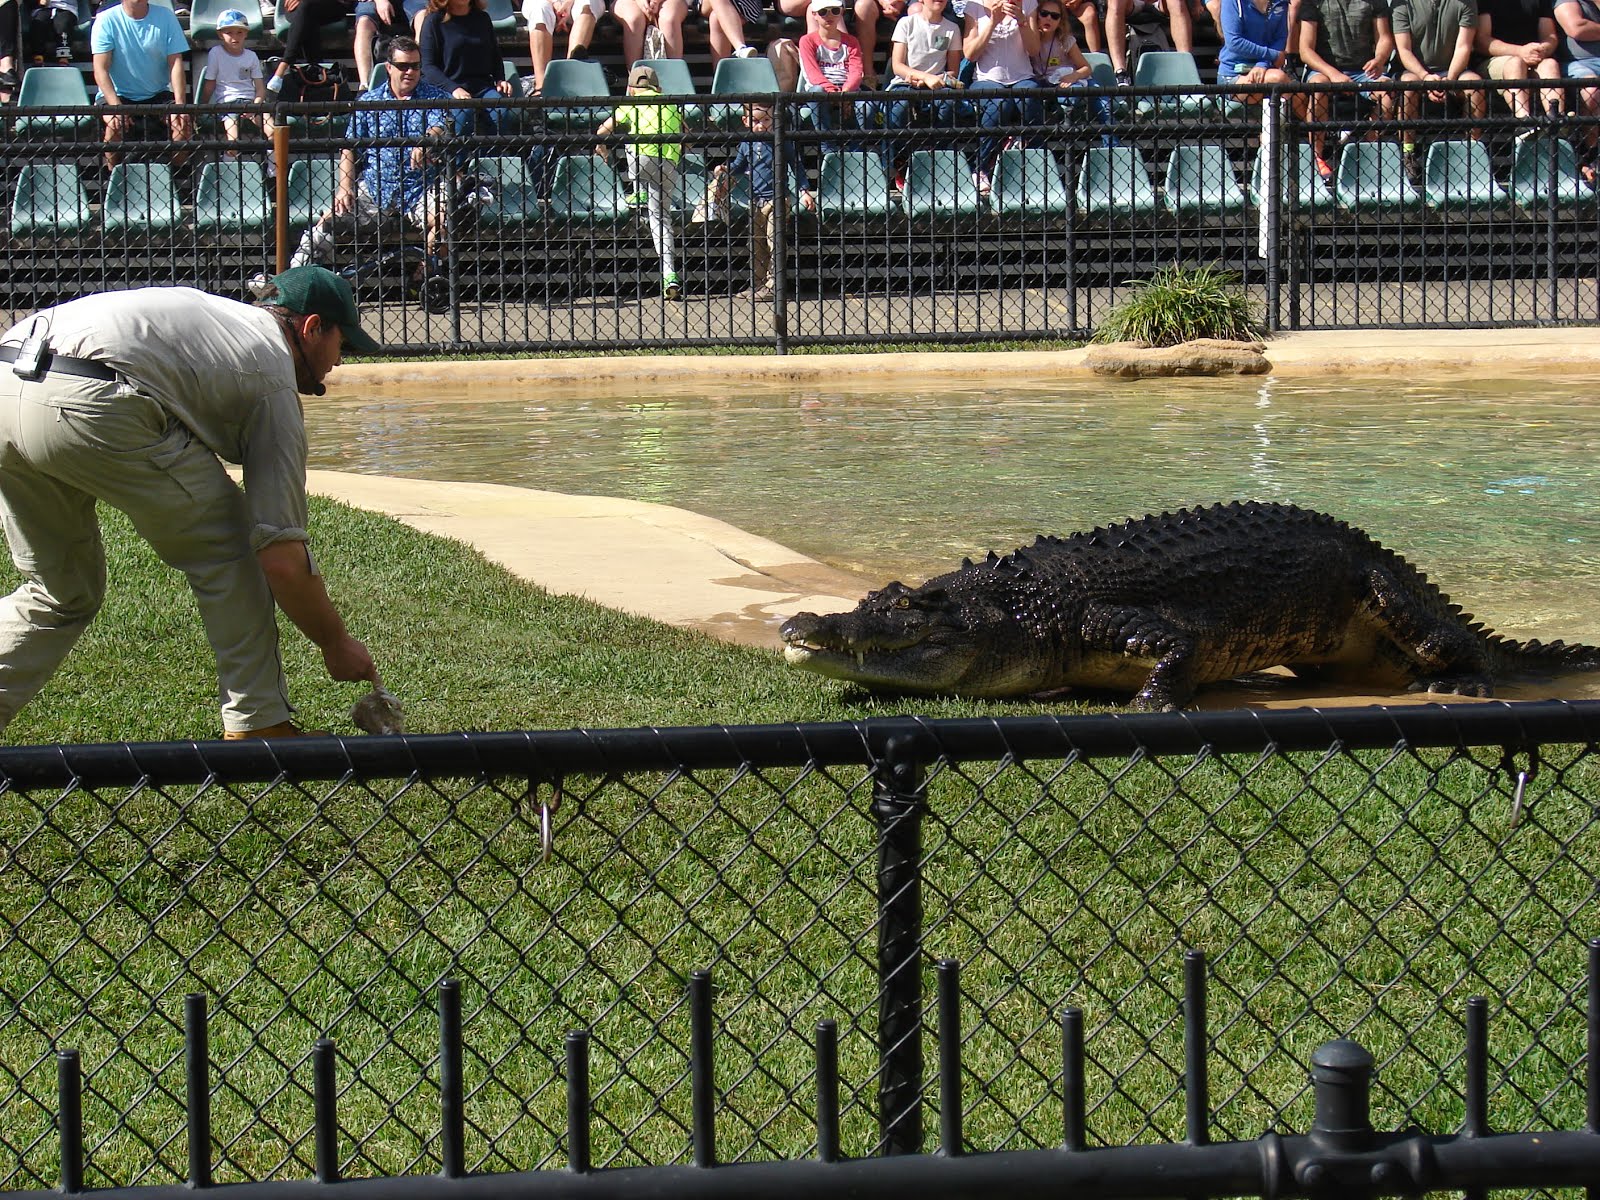 The biggest crocodile in Australia zoo